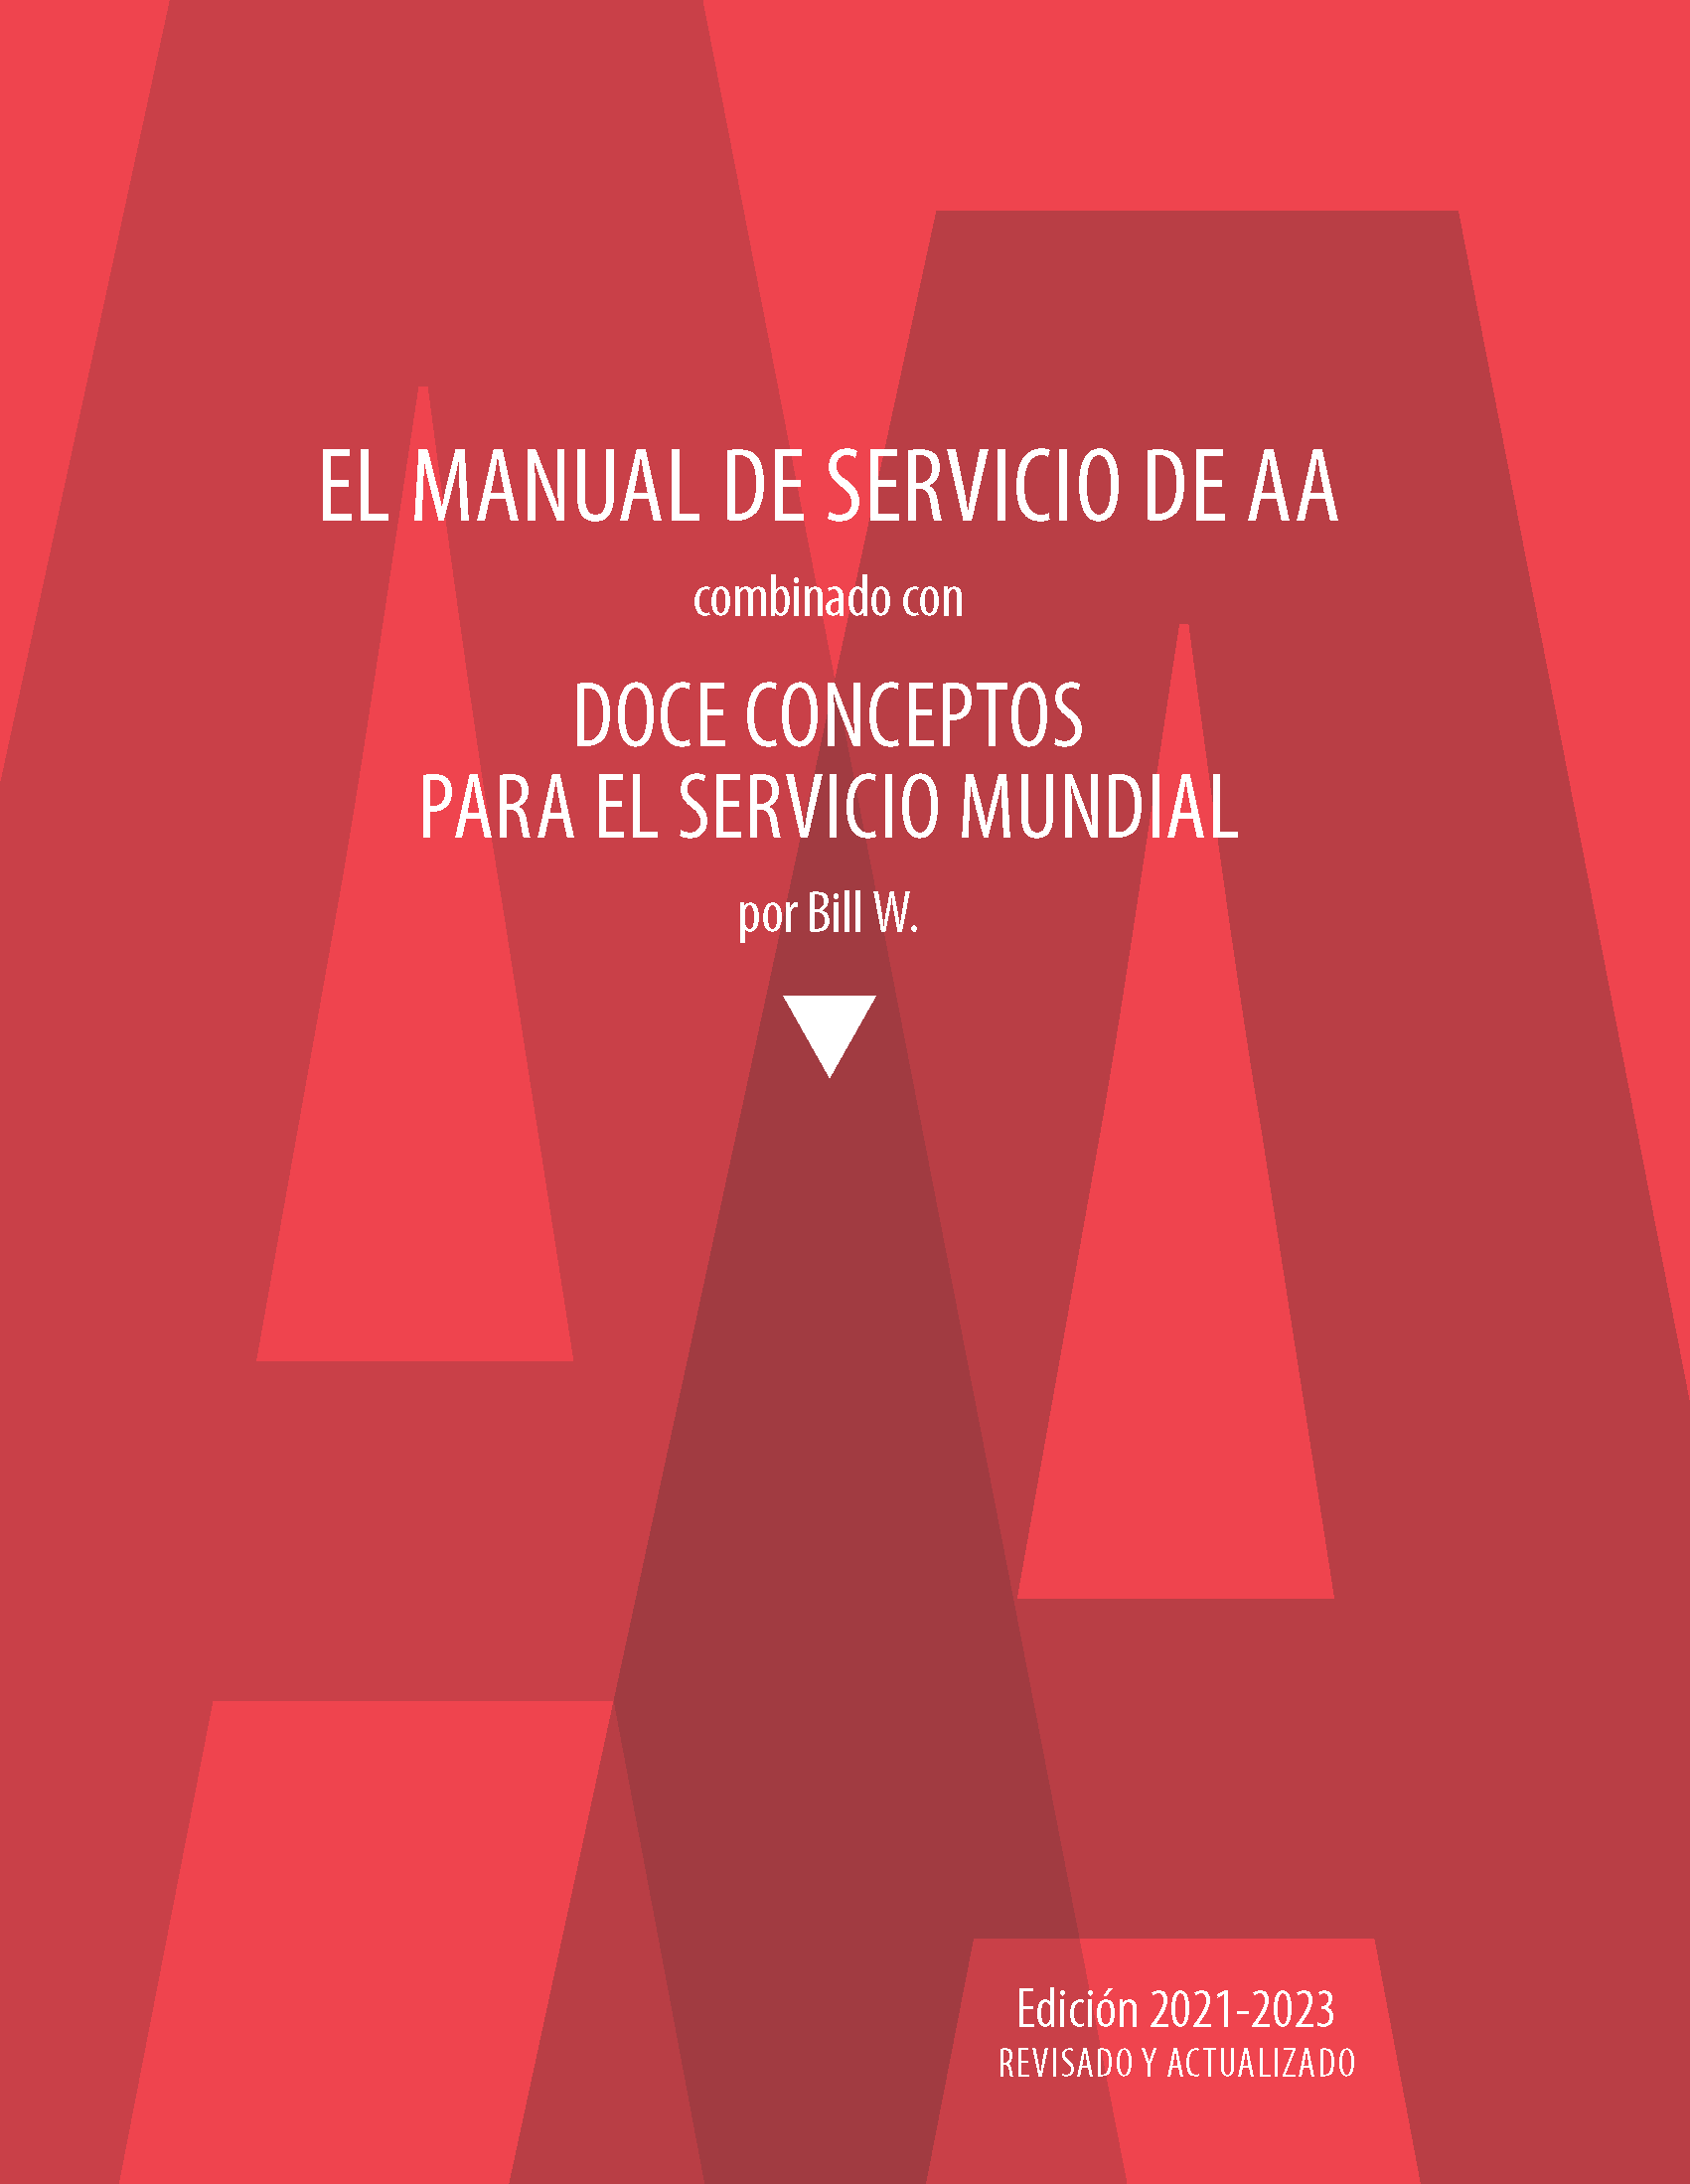 Service manual 12 concepts image